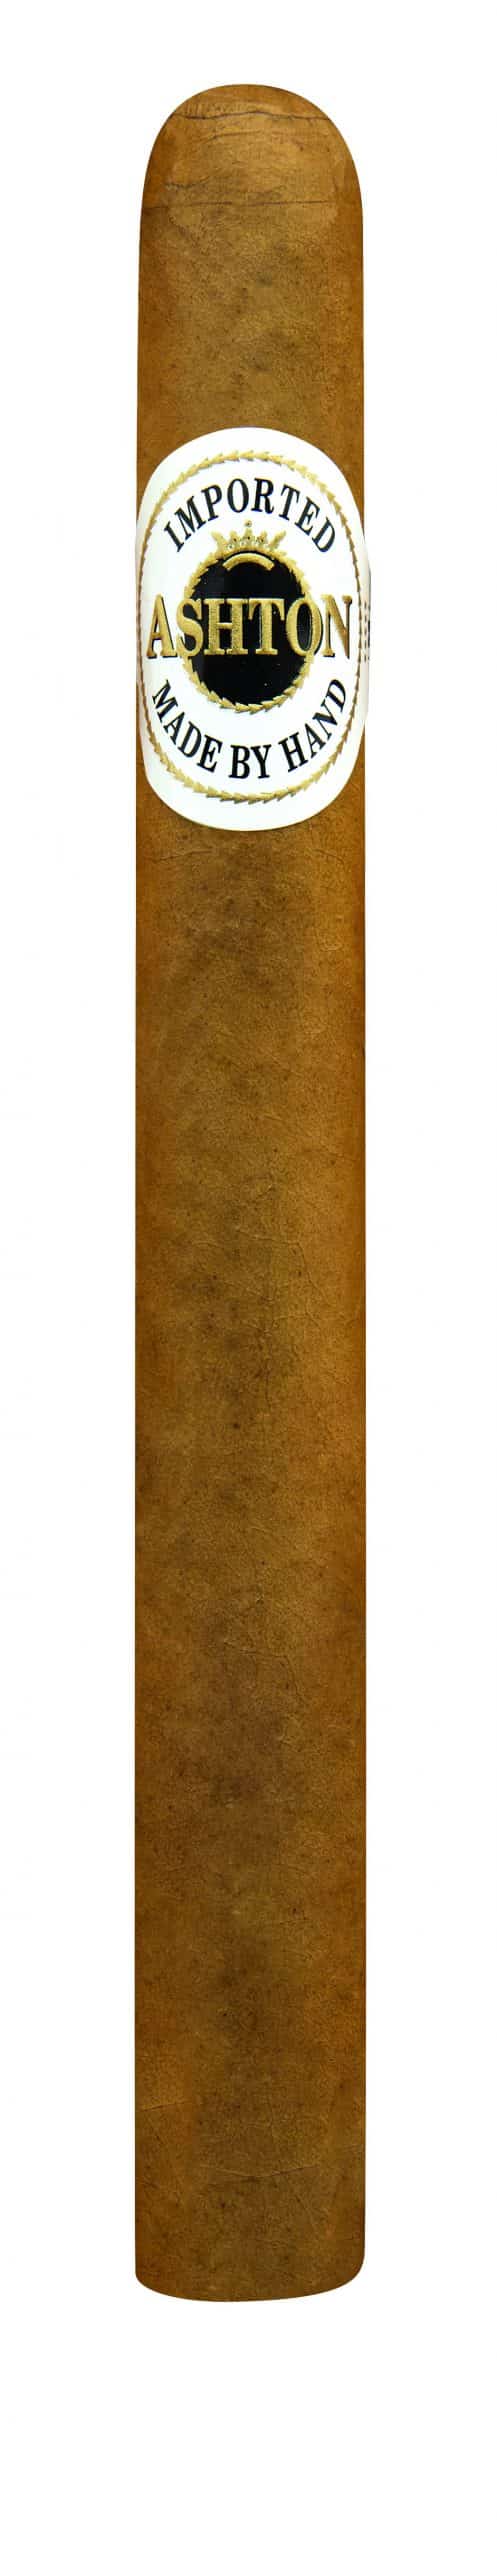 Single Ashton 898 cigar